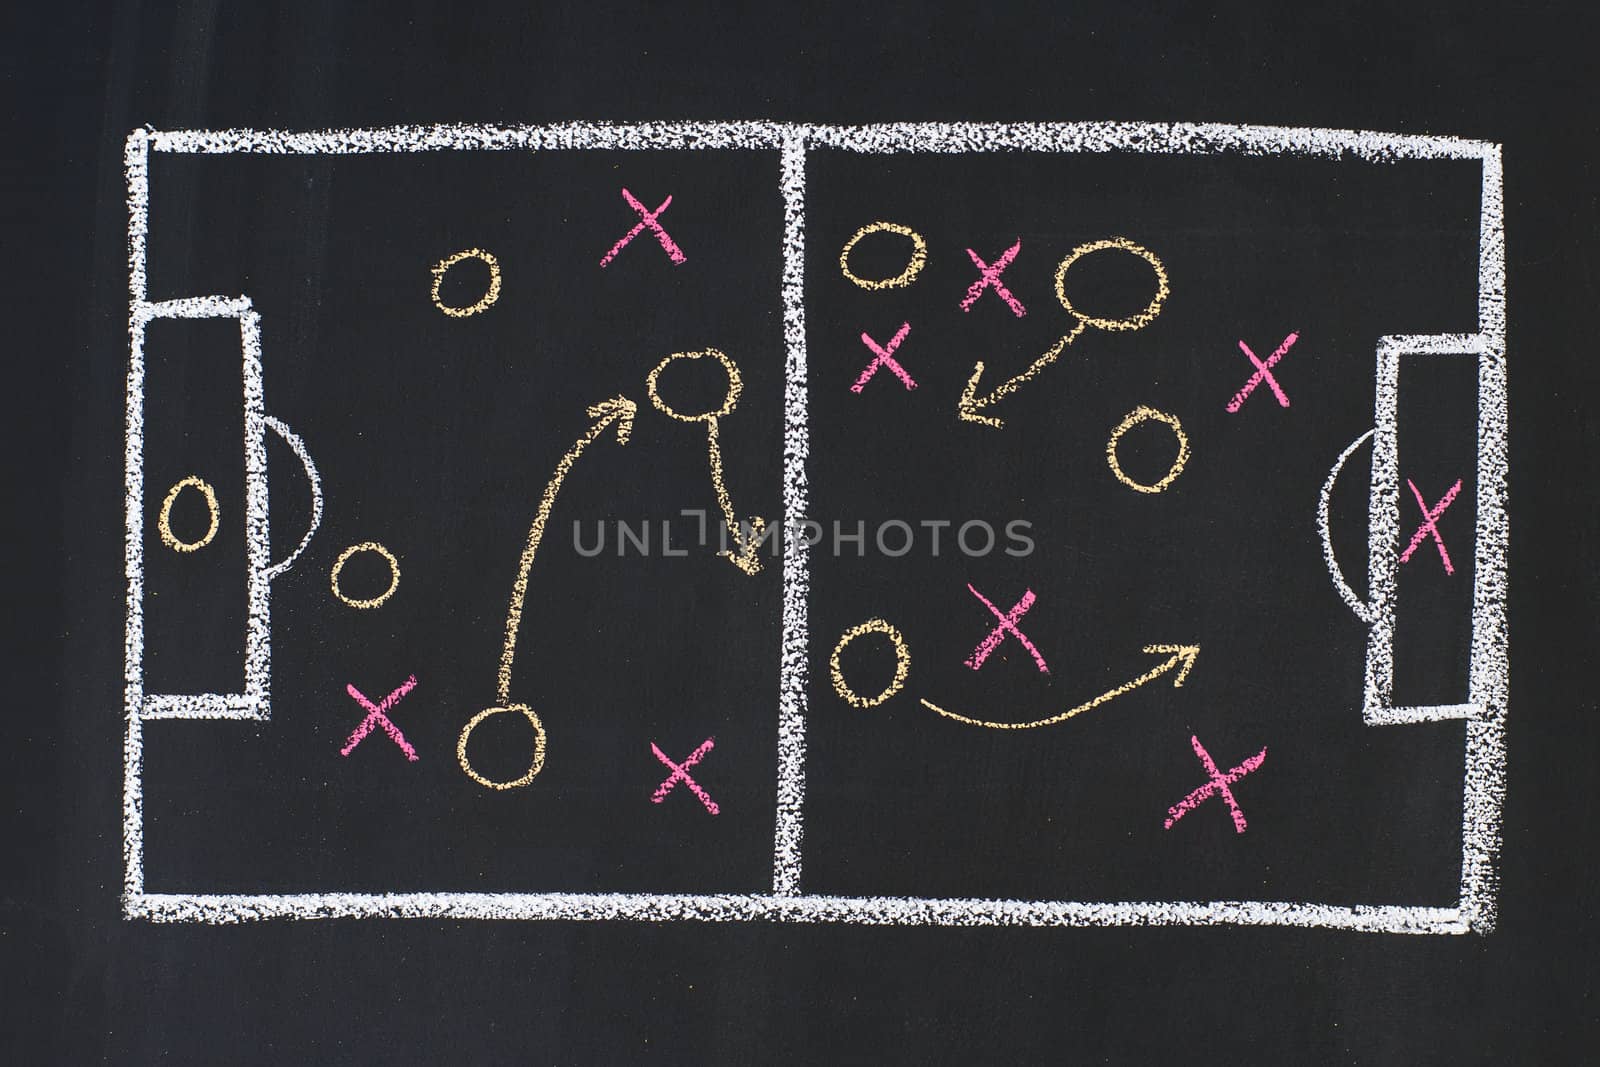 Scheme of sports strategy, drawn on a blackboard